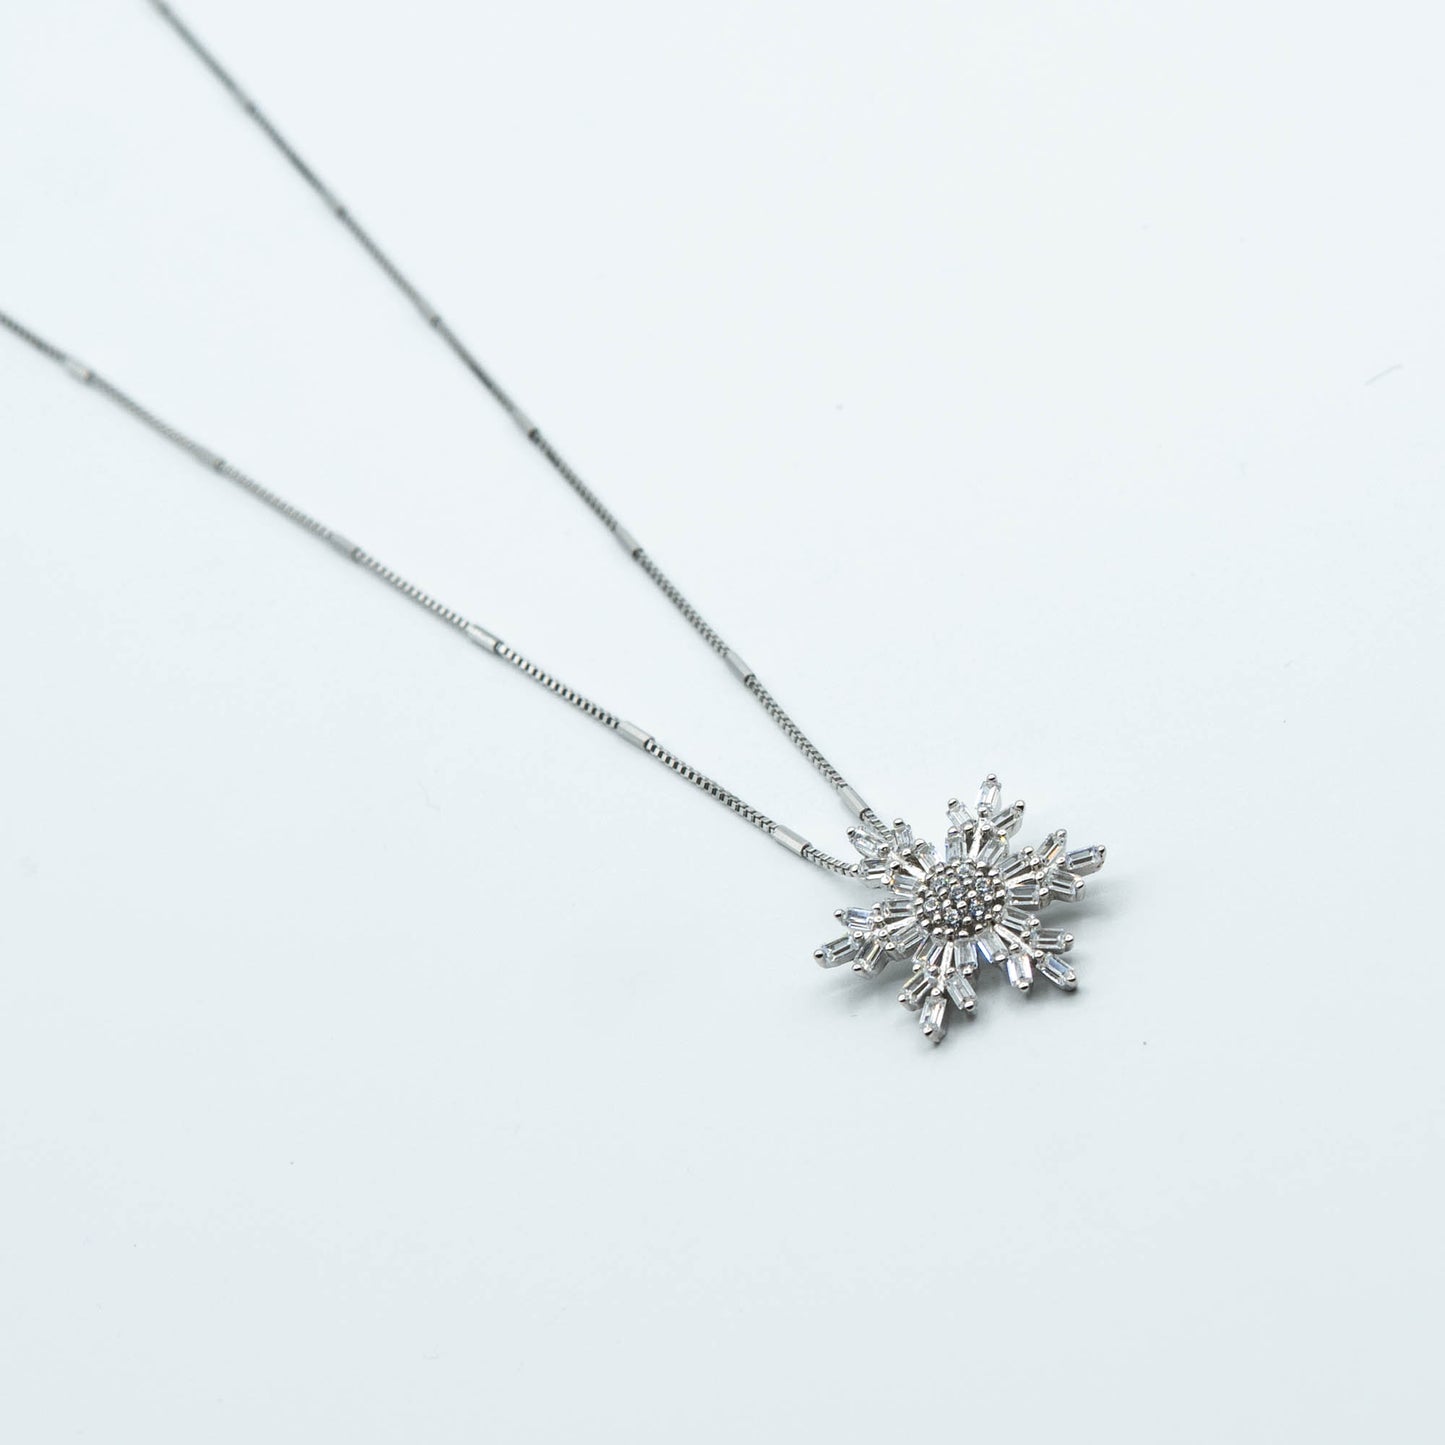 DK-925-453 snowflake necklace